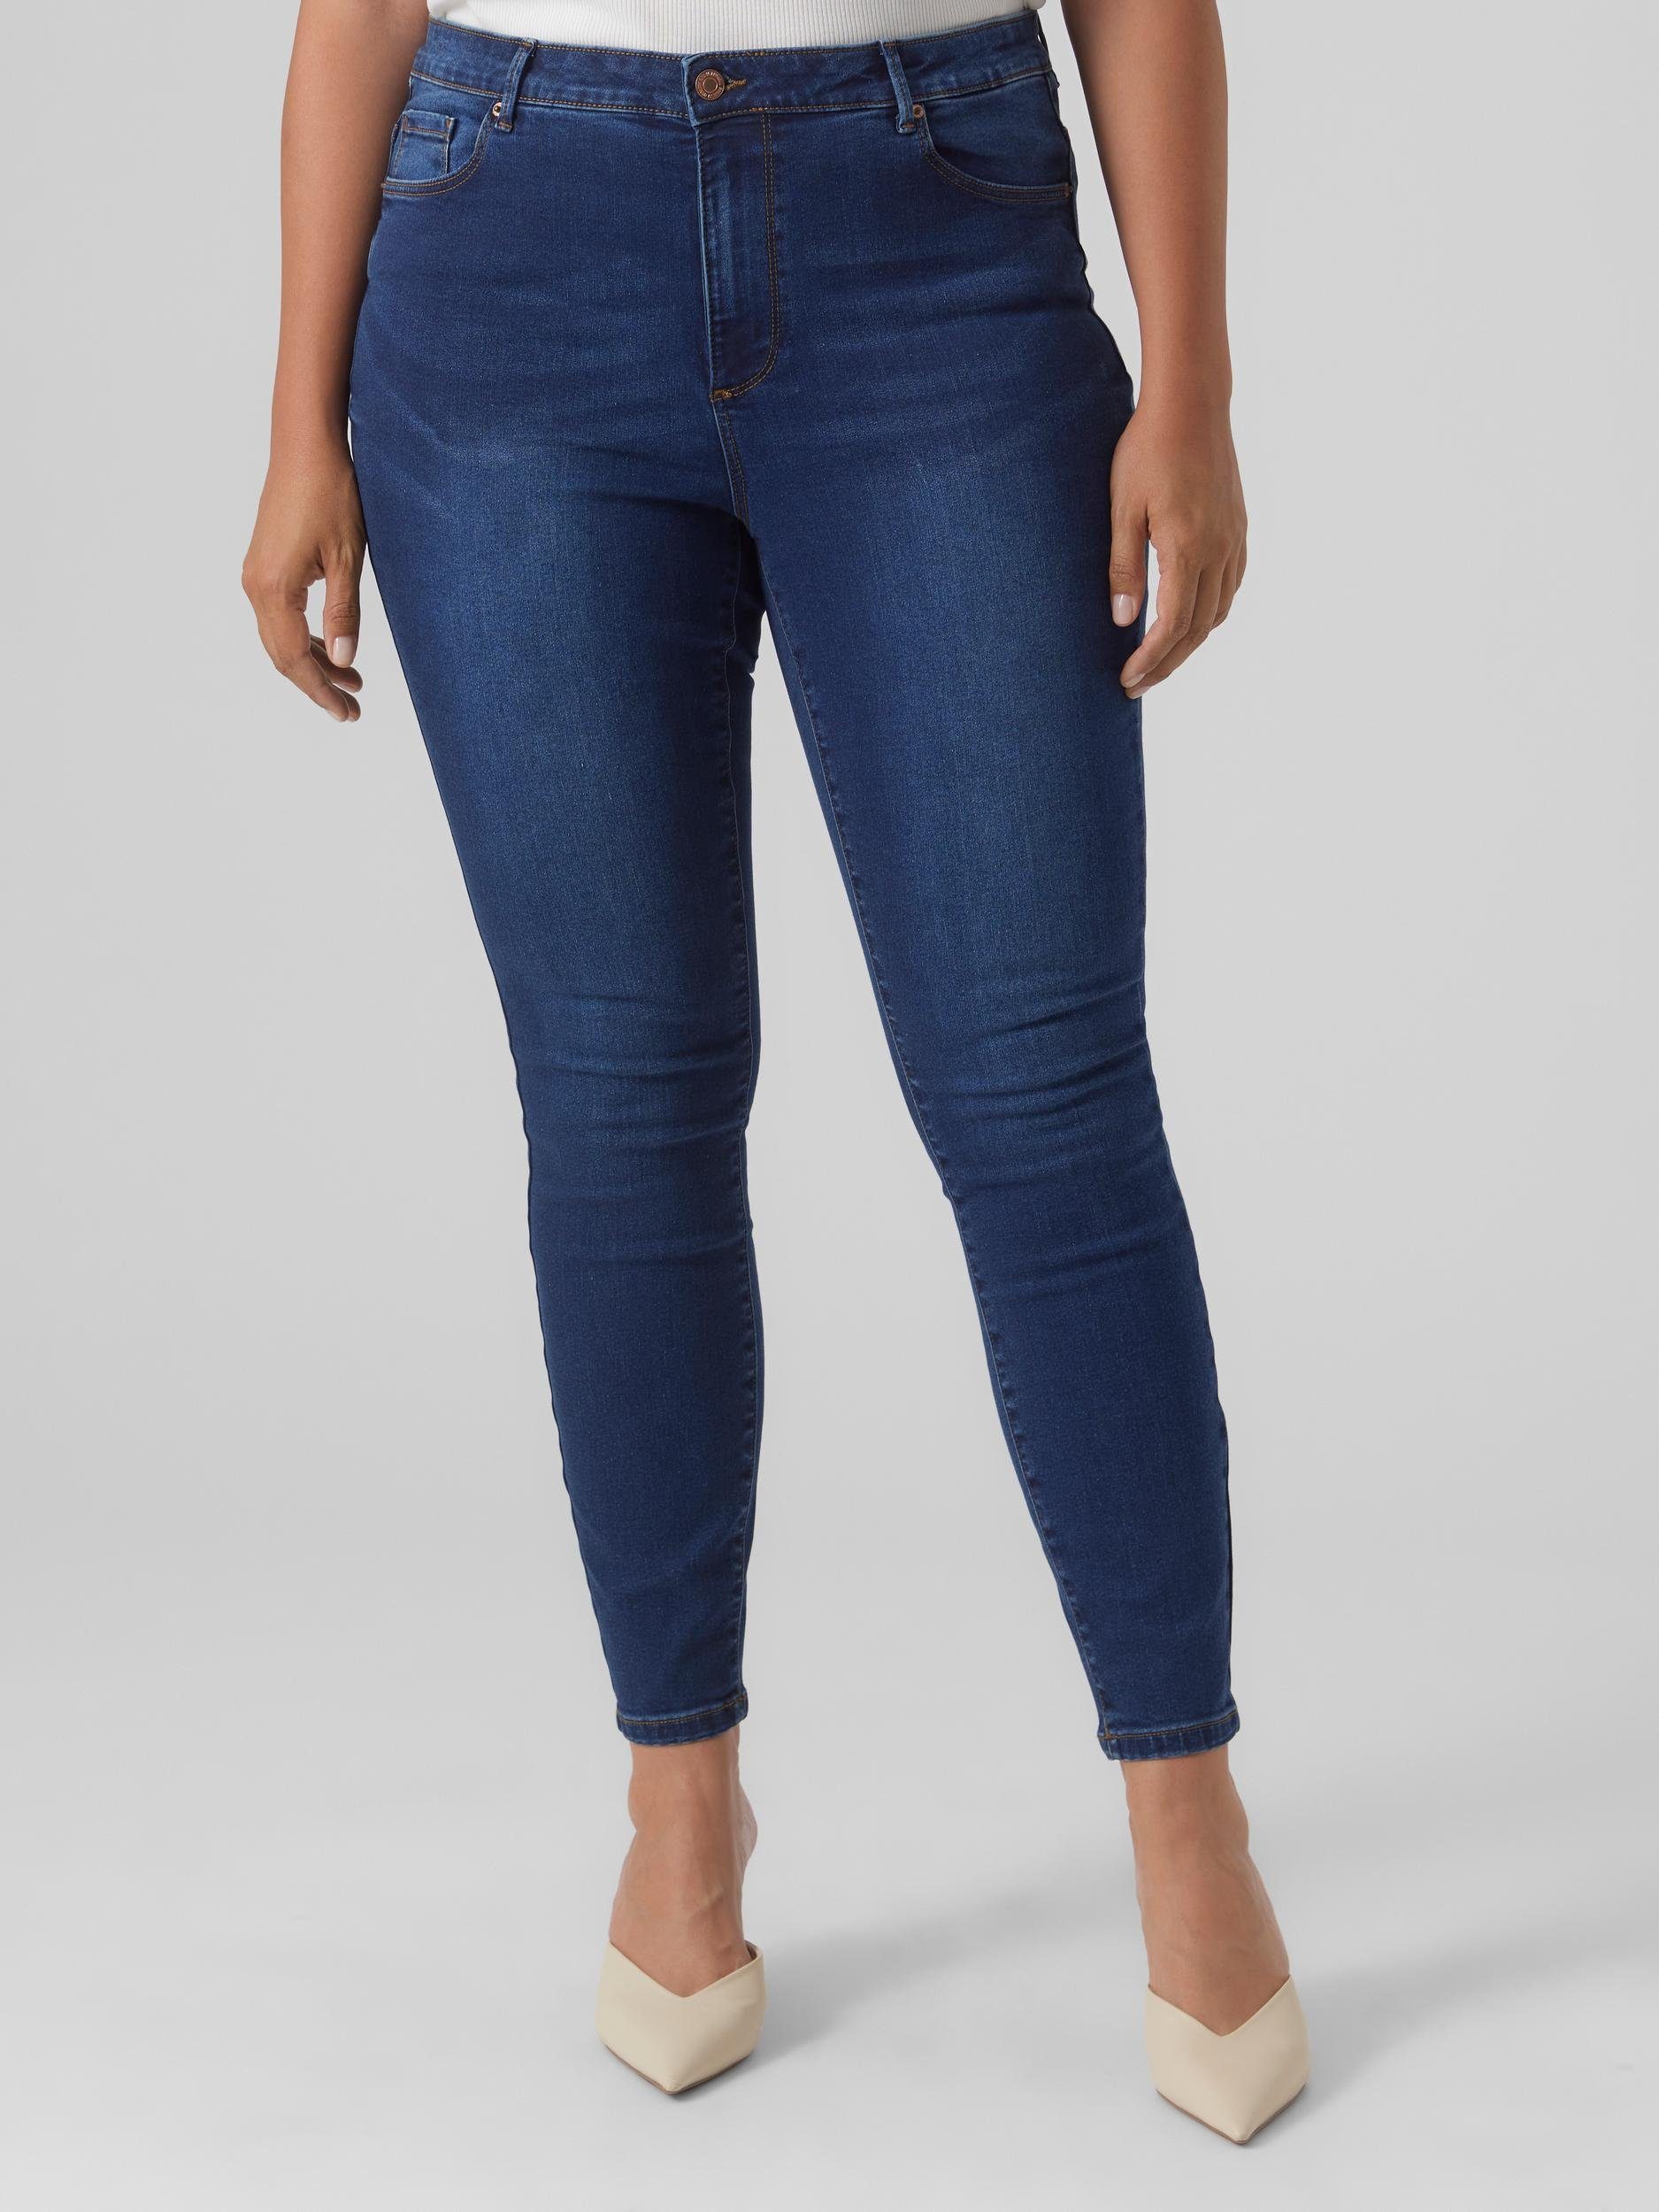 NOOS OTTO Curve Moda J | Vero HR fit jeans online CUR nu SOFT VI3128 bestellen SKINNY VMCPHIA Skinny